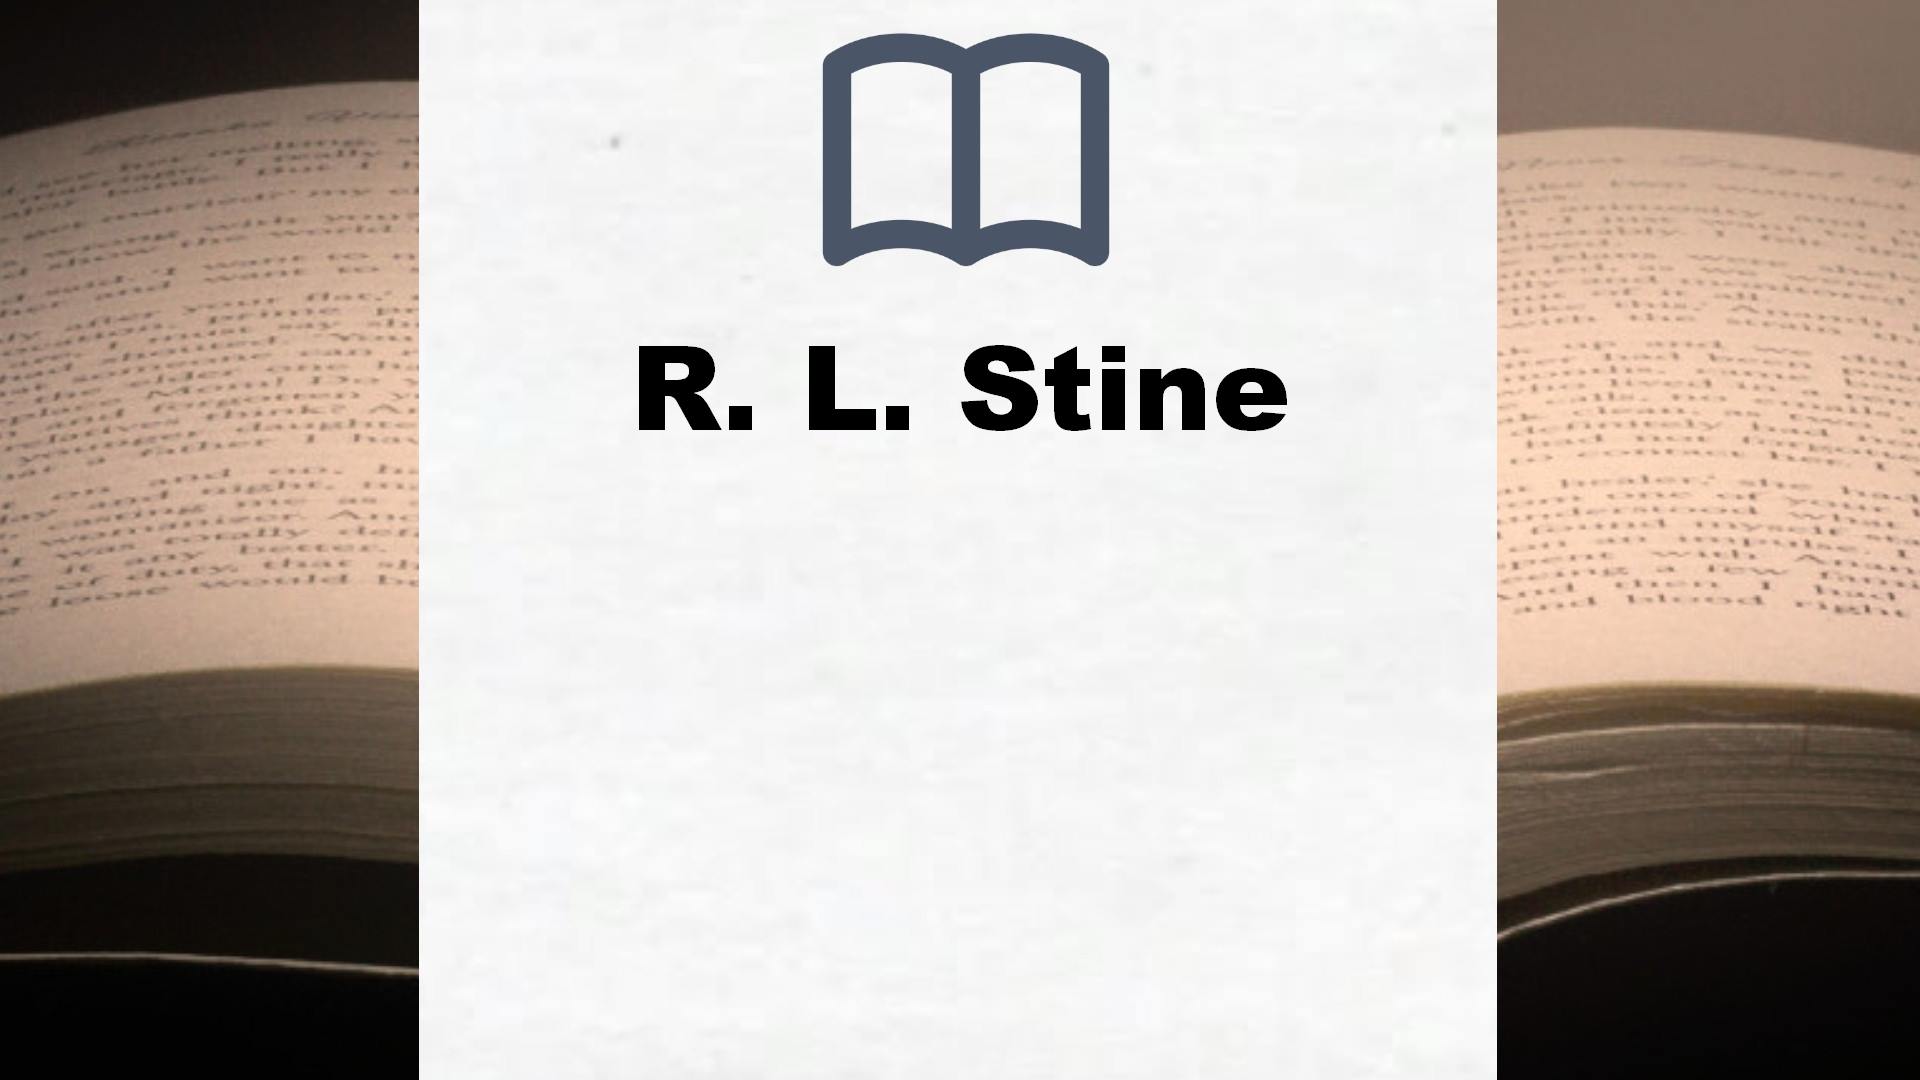 Libros R. L. Stine